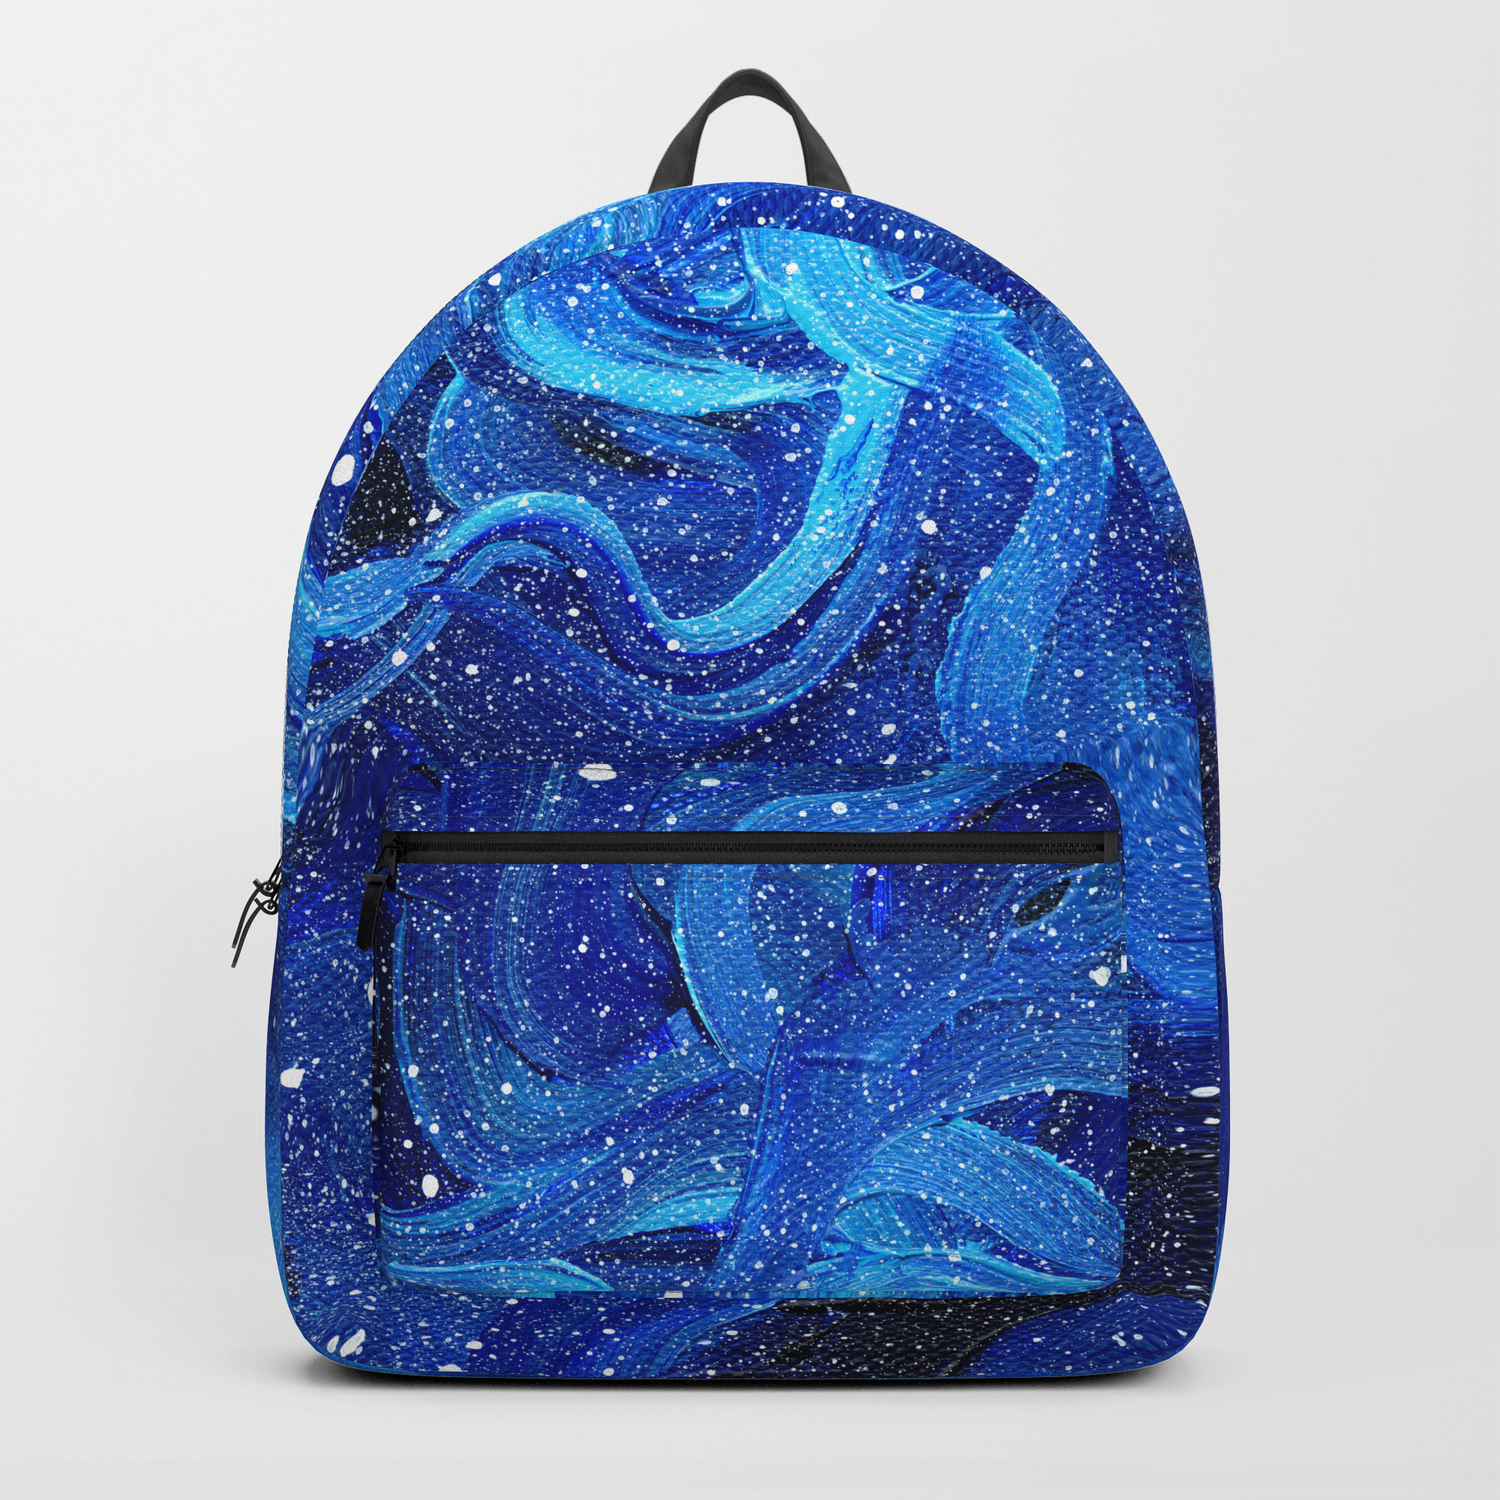 Erfenis In het algemeen vee Galaxy Painting Acrylic Galaxy Art Backpack by Olechka | Society6